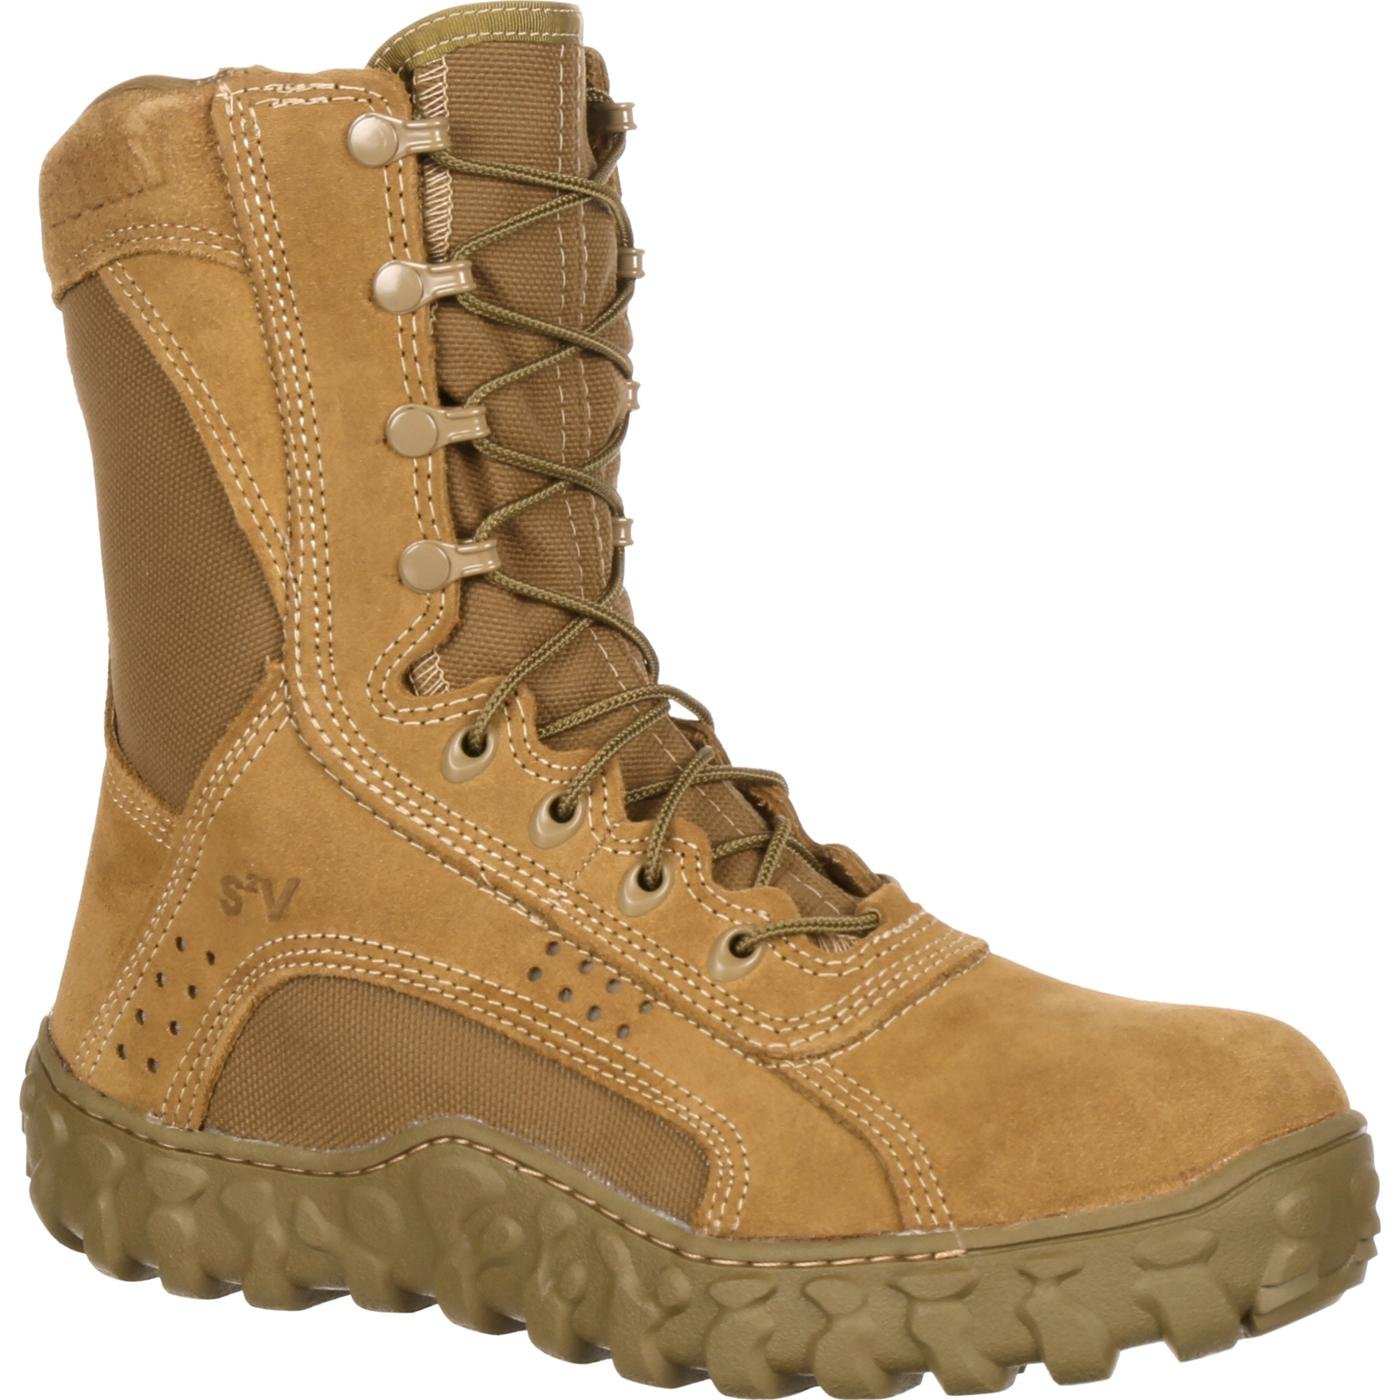 Bates ultra-lites duty-boots men's size10 medium width - sporting